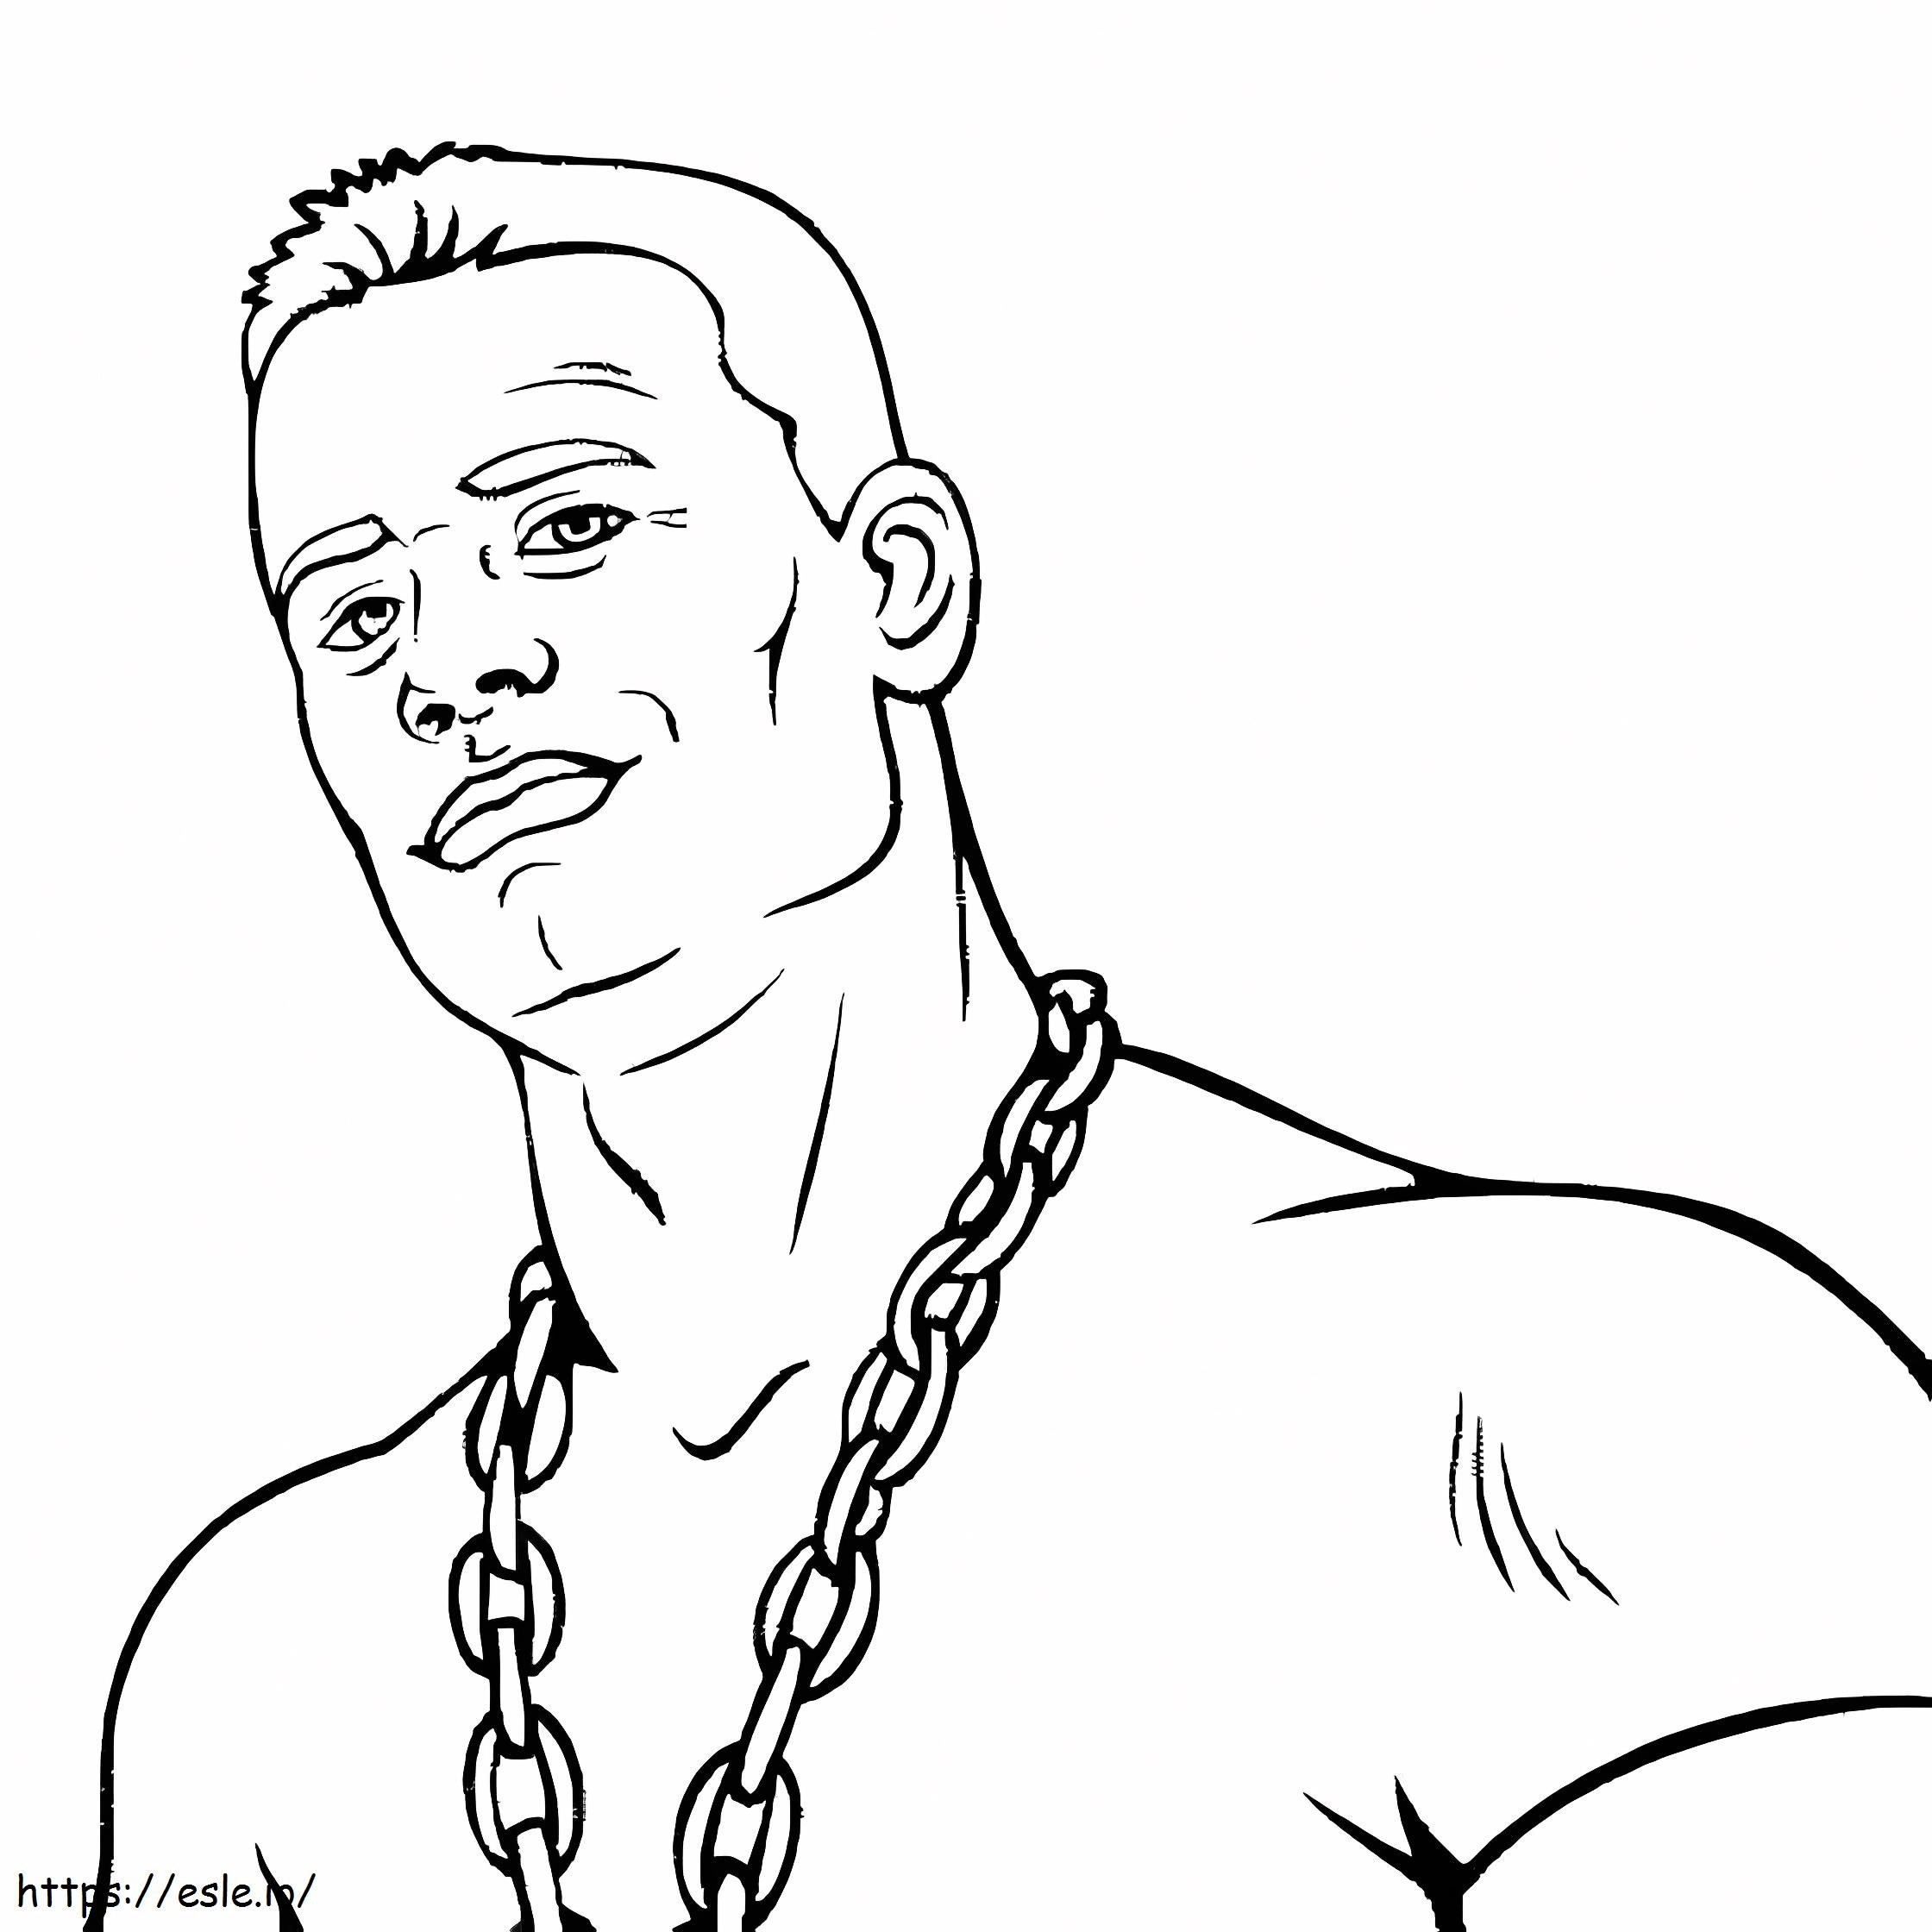 John Cena Smiling coloring page